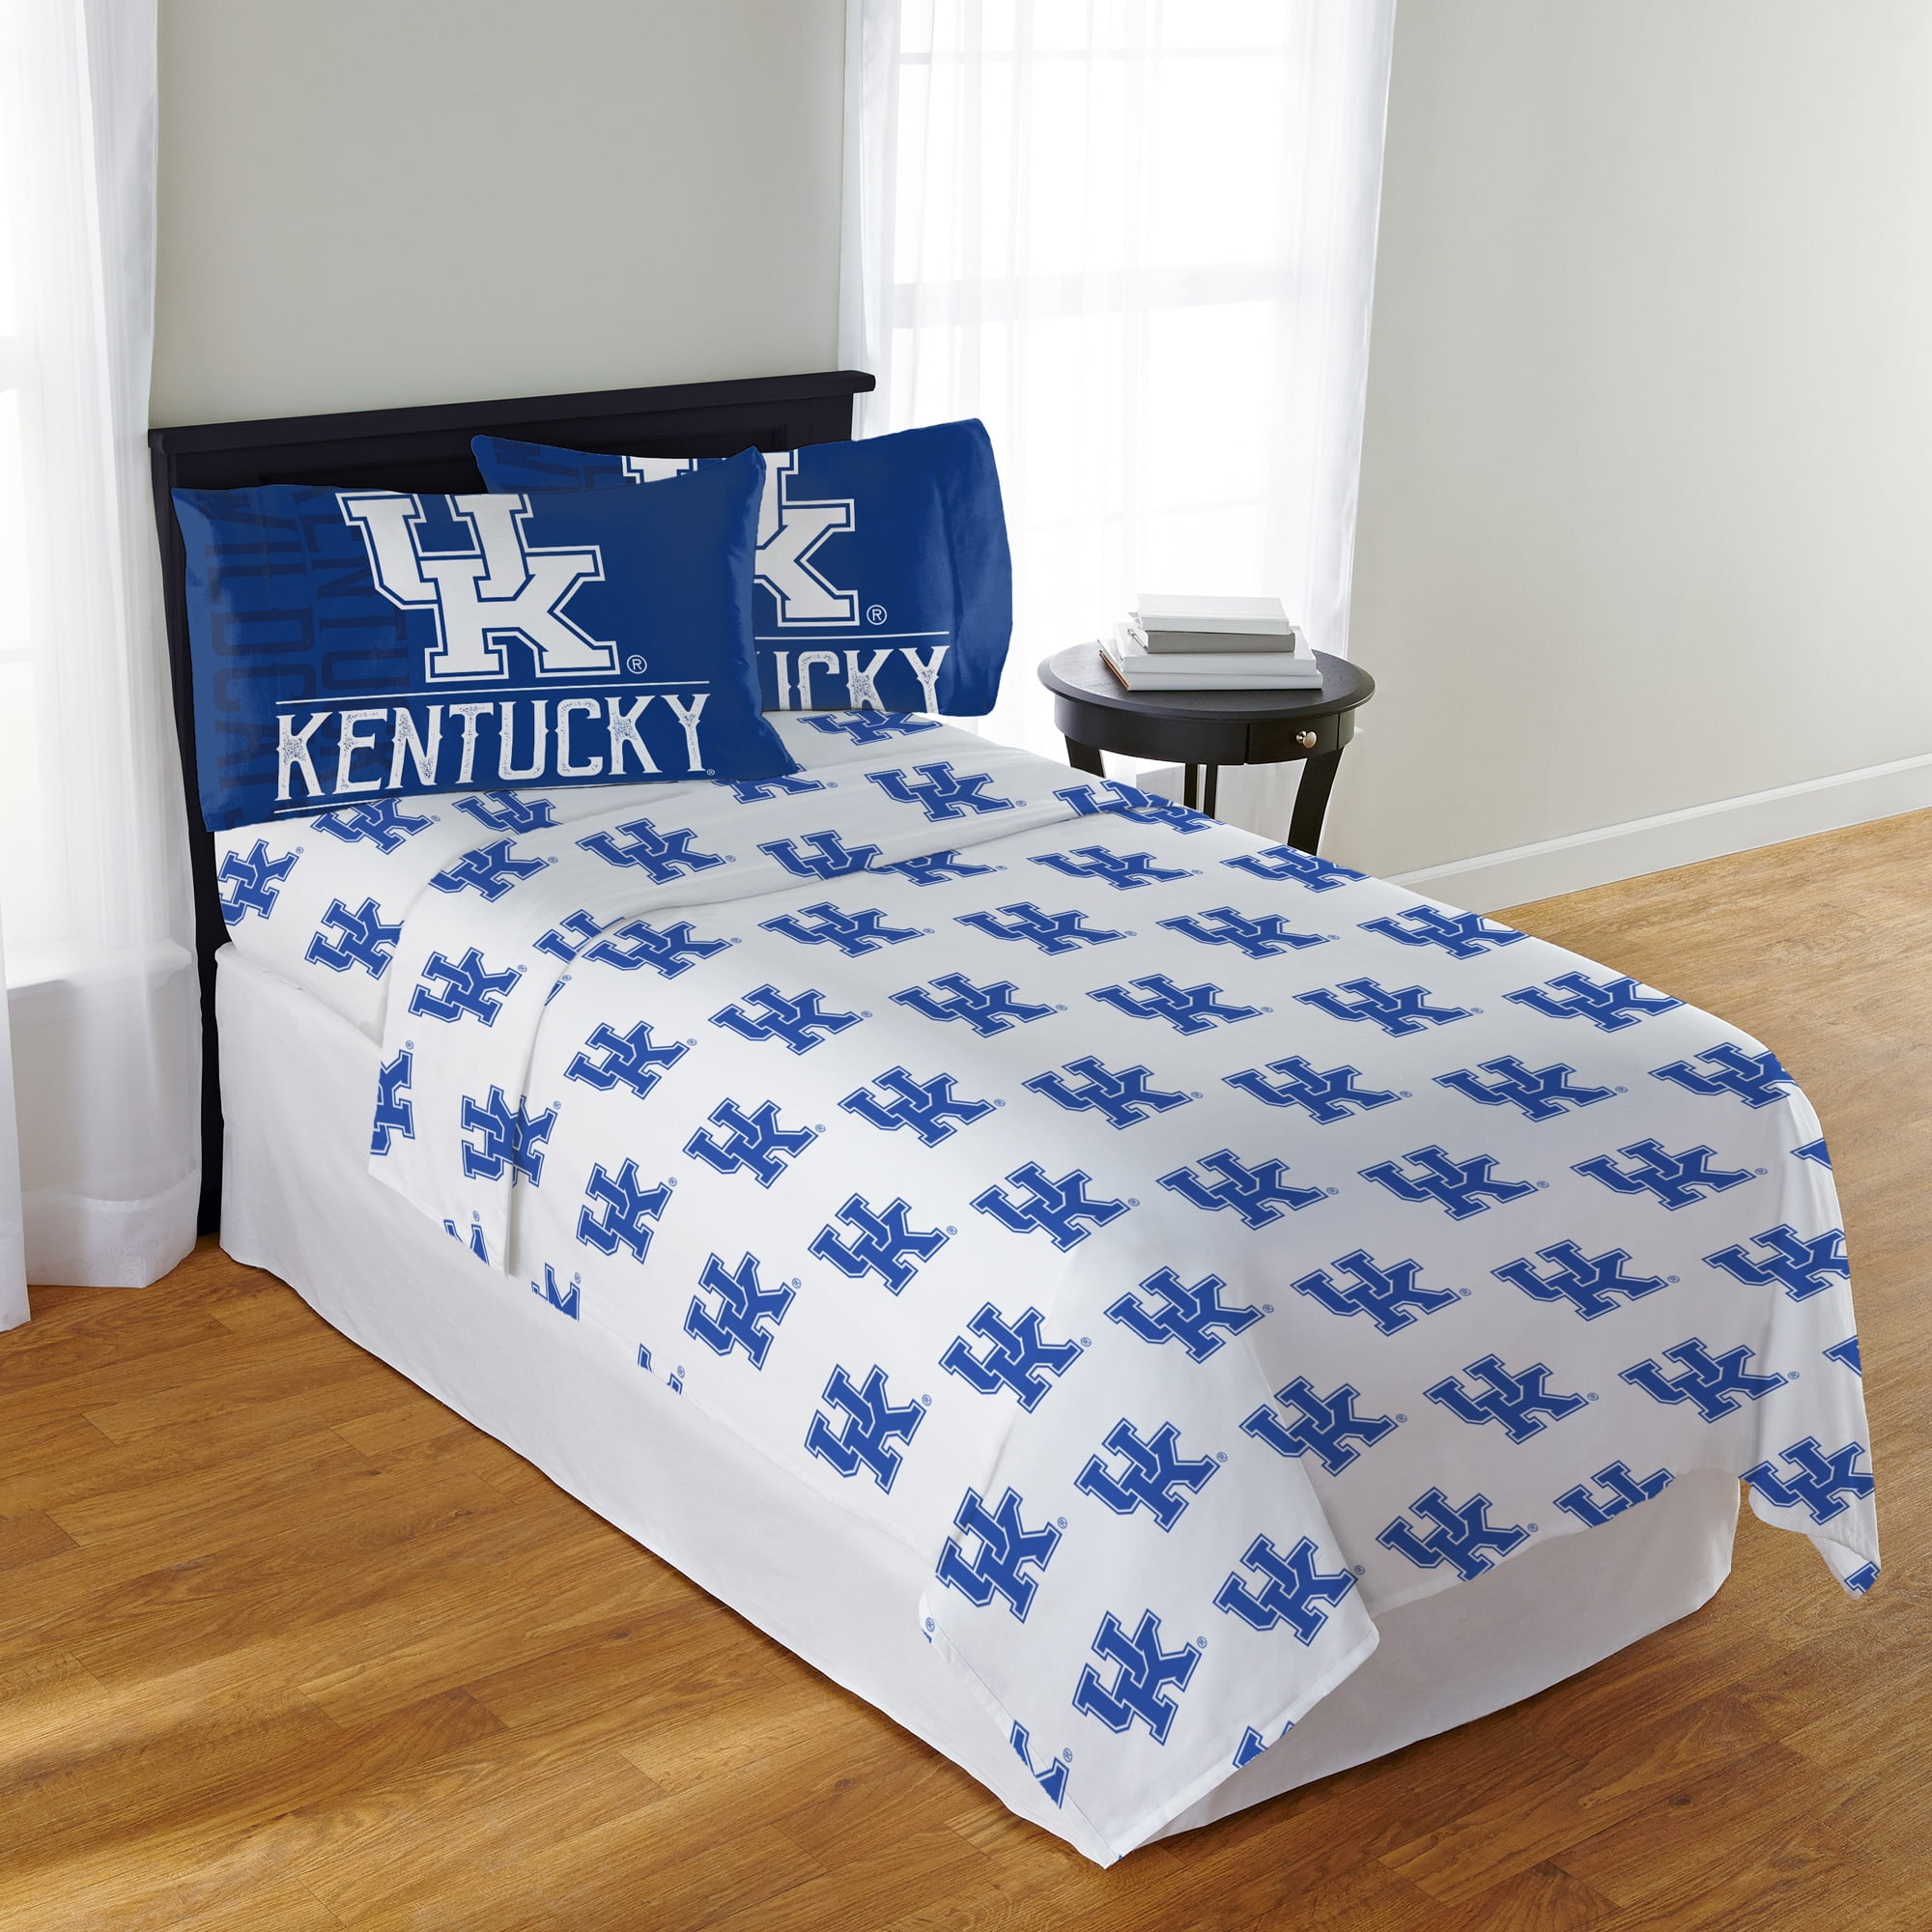 New Oklahoma Sooners  5 Piece Comforter Set Full Bed Bedding Set ~ NCAA Licensed